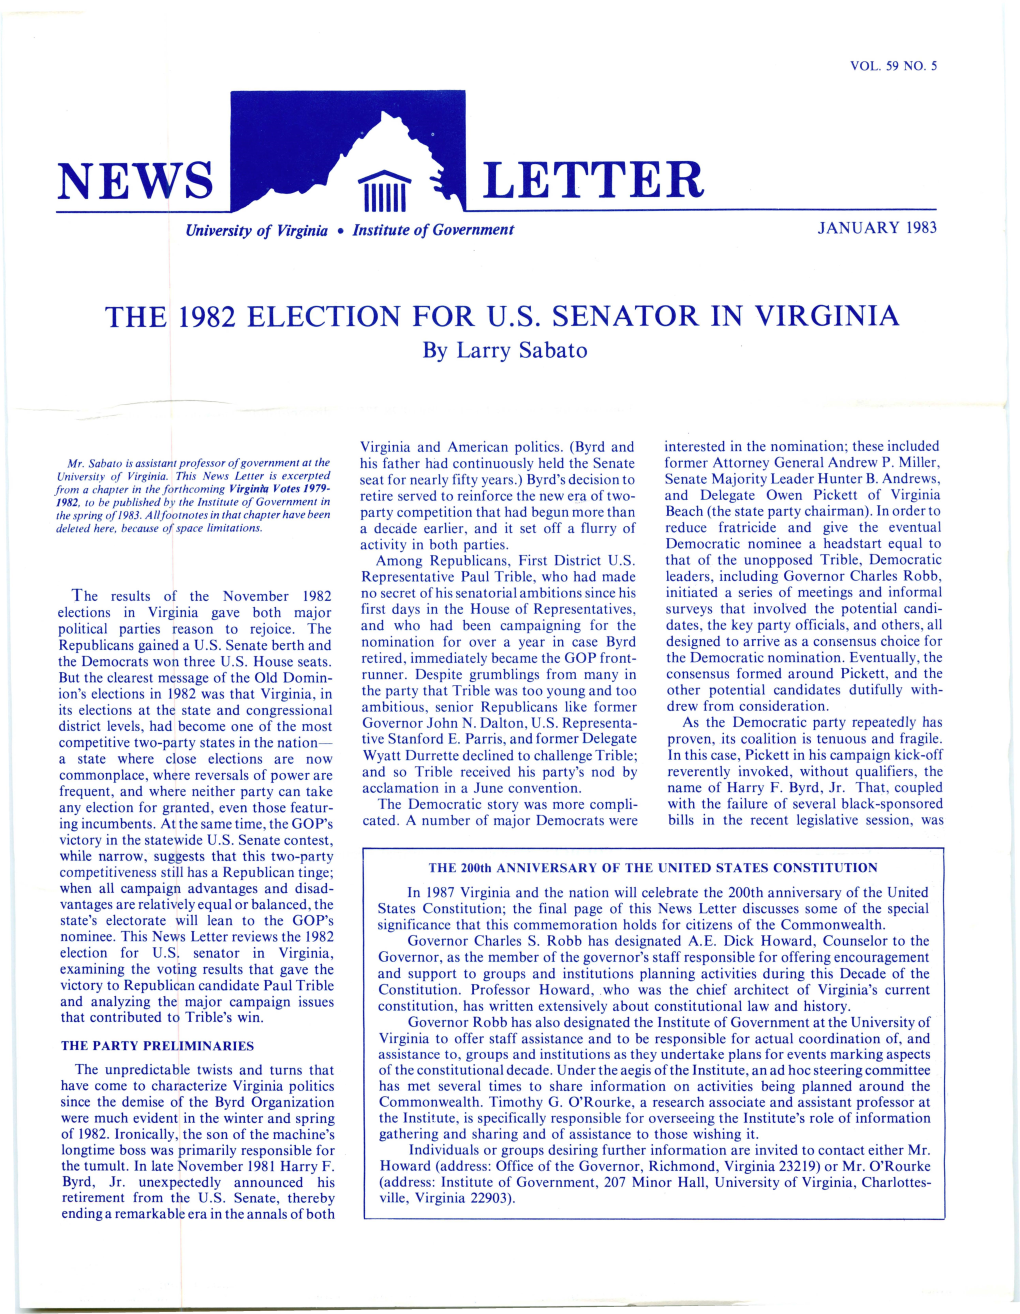 The Virginia News Letter